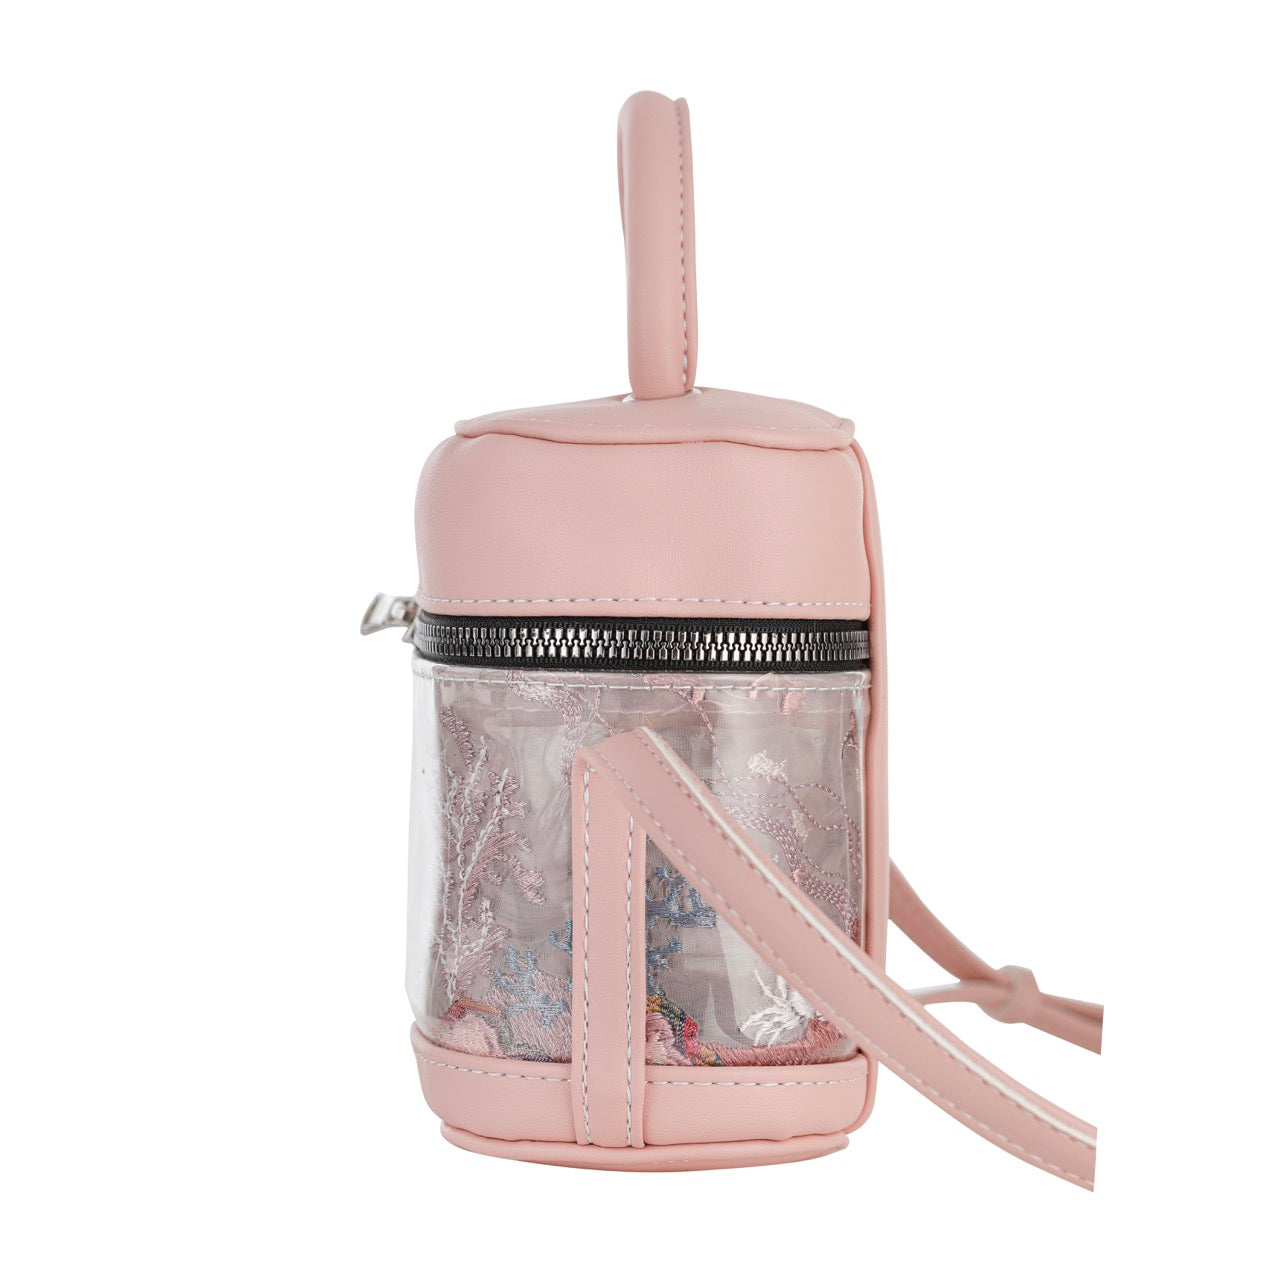 ngaos_ocean_child_handbag_pink_salt_water_resistant